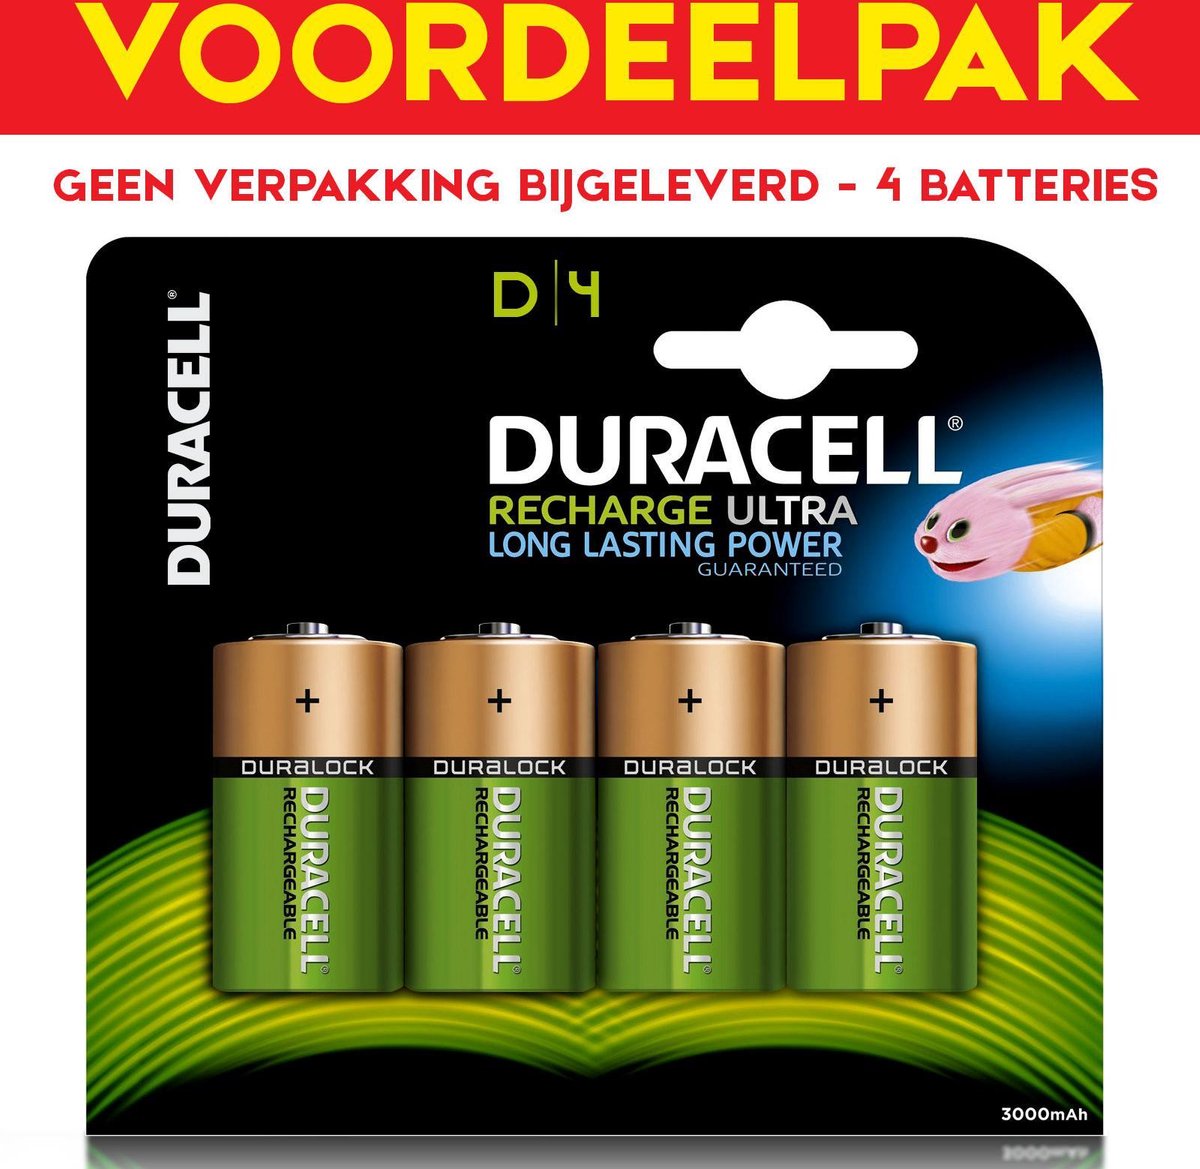 Duracell D Oplaadbare batterijen - onverpakt - 4 stuks - 3000mAh - 4-pack